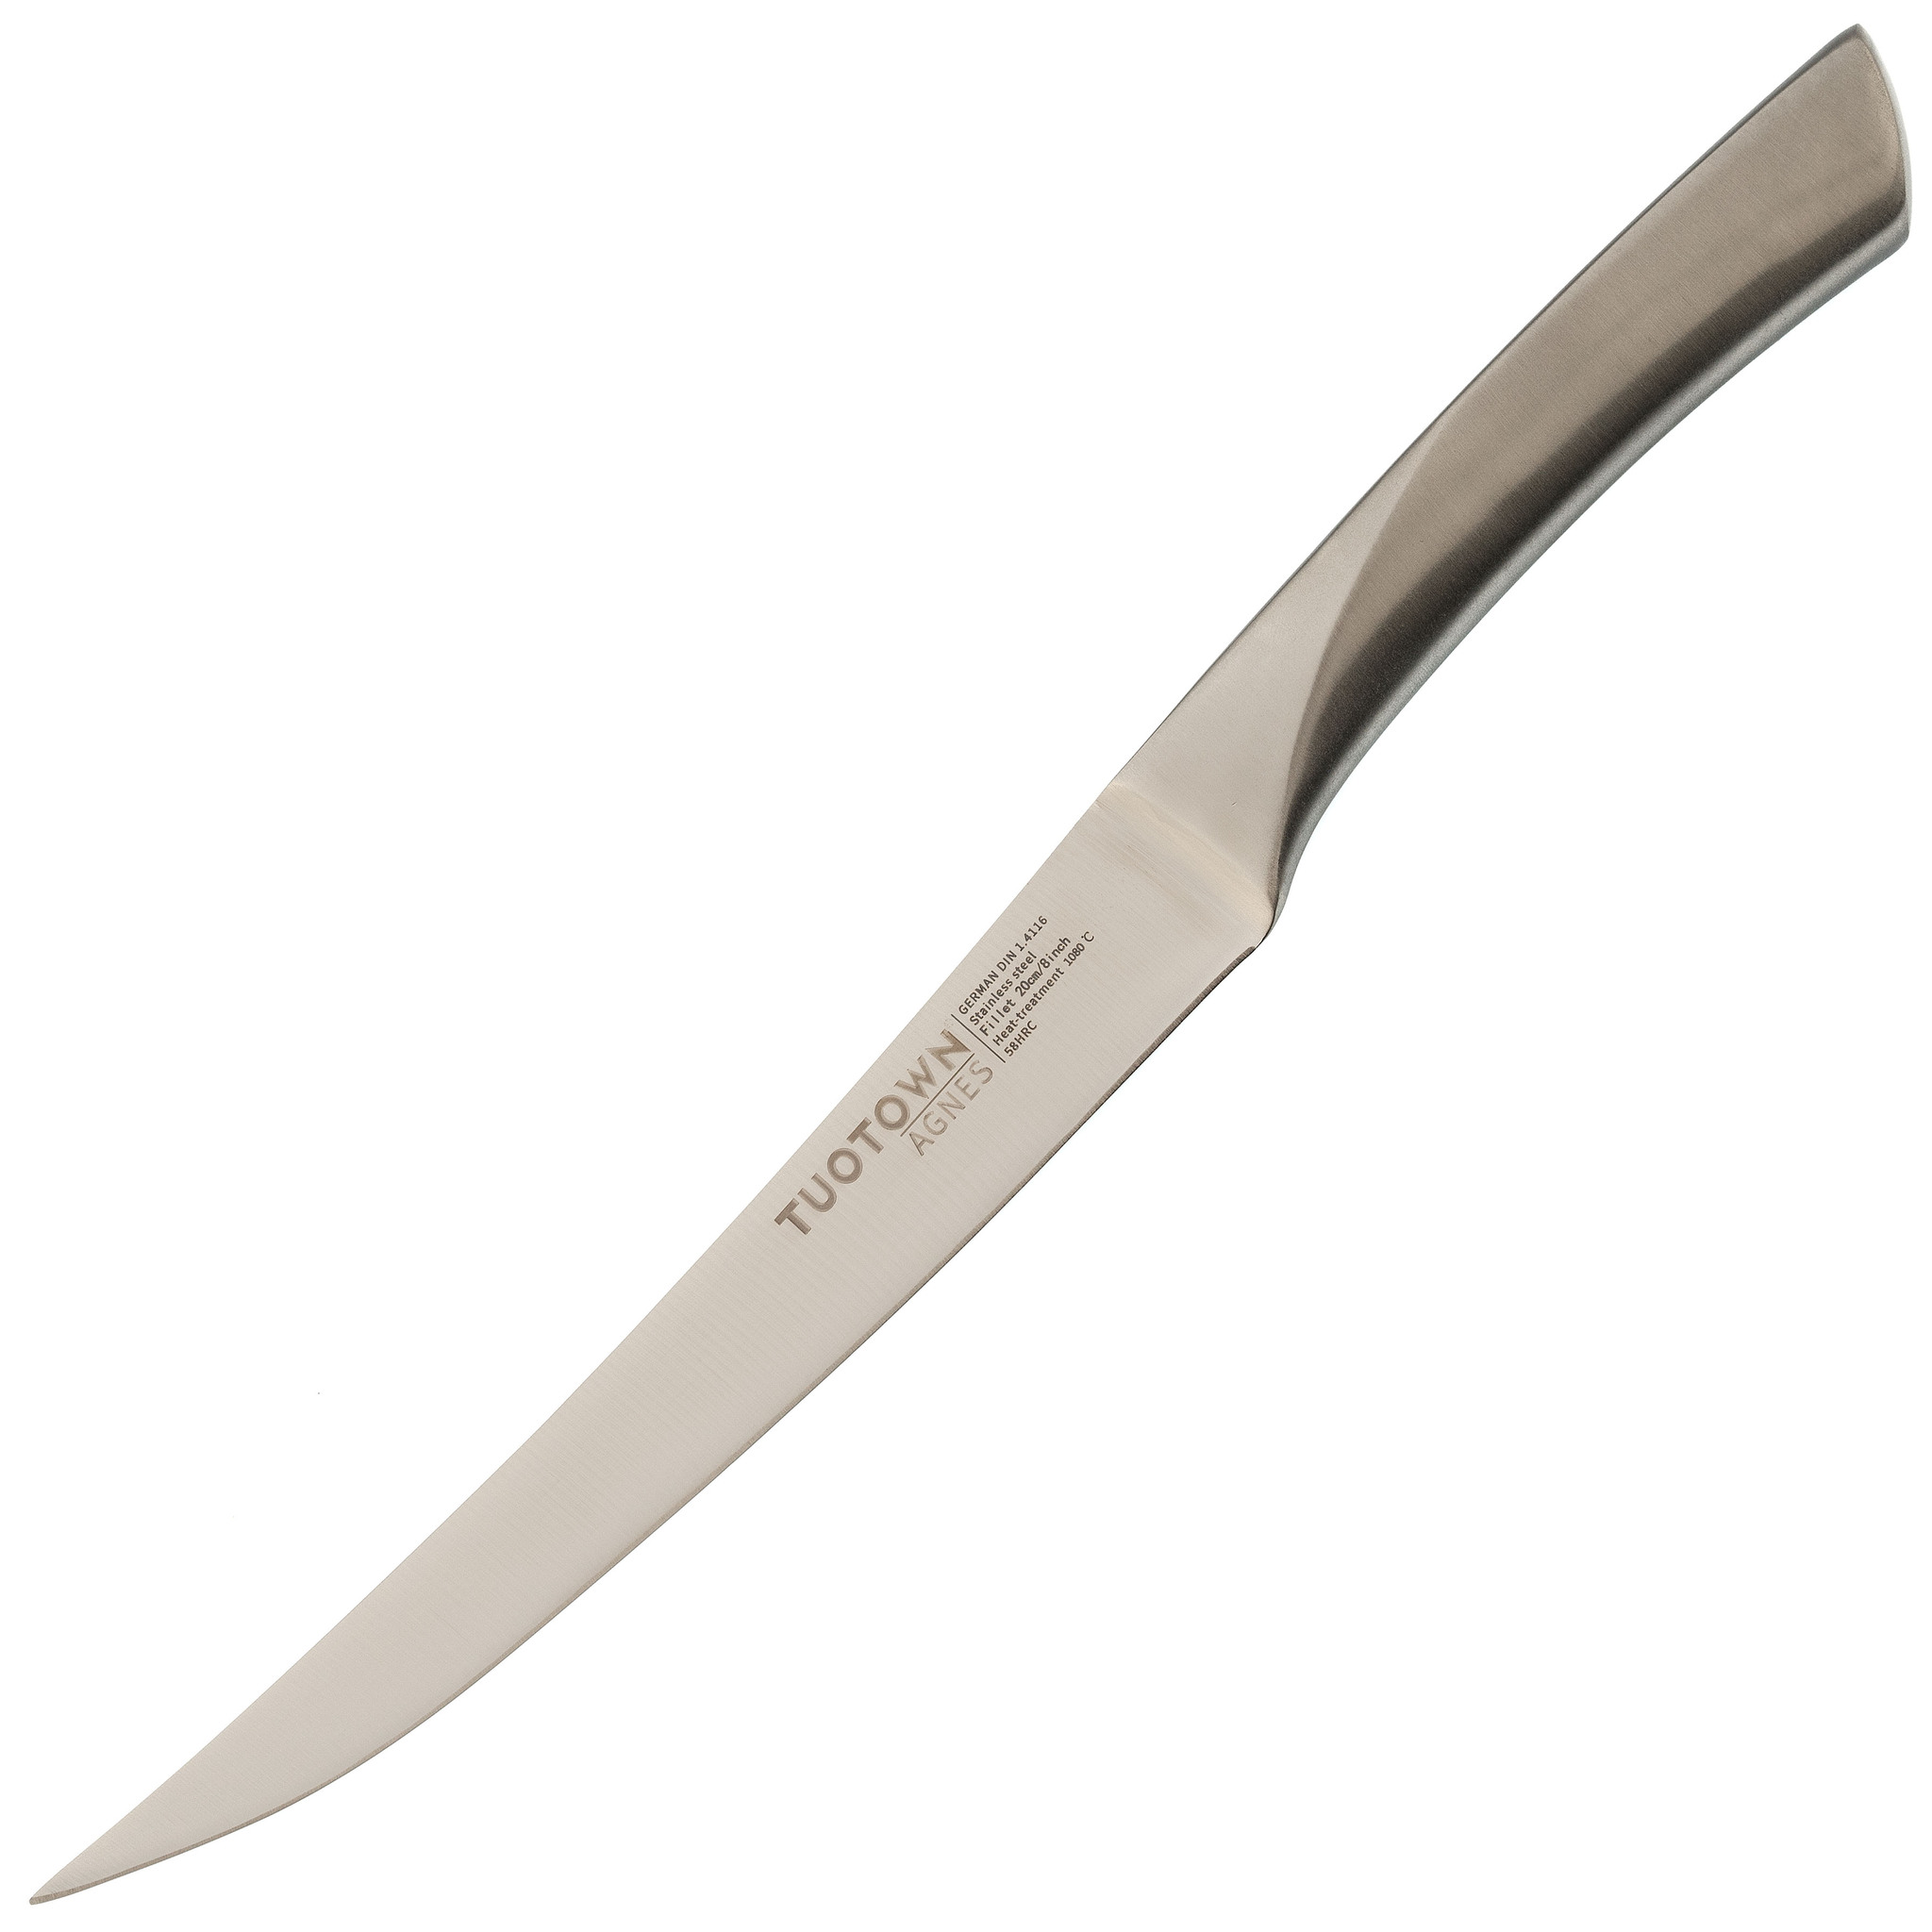 Кухонный филейный нож Tuotown, сталь 1.4116